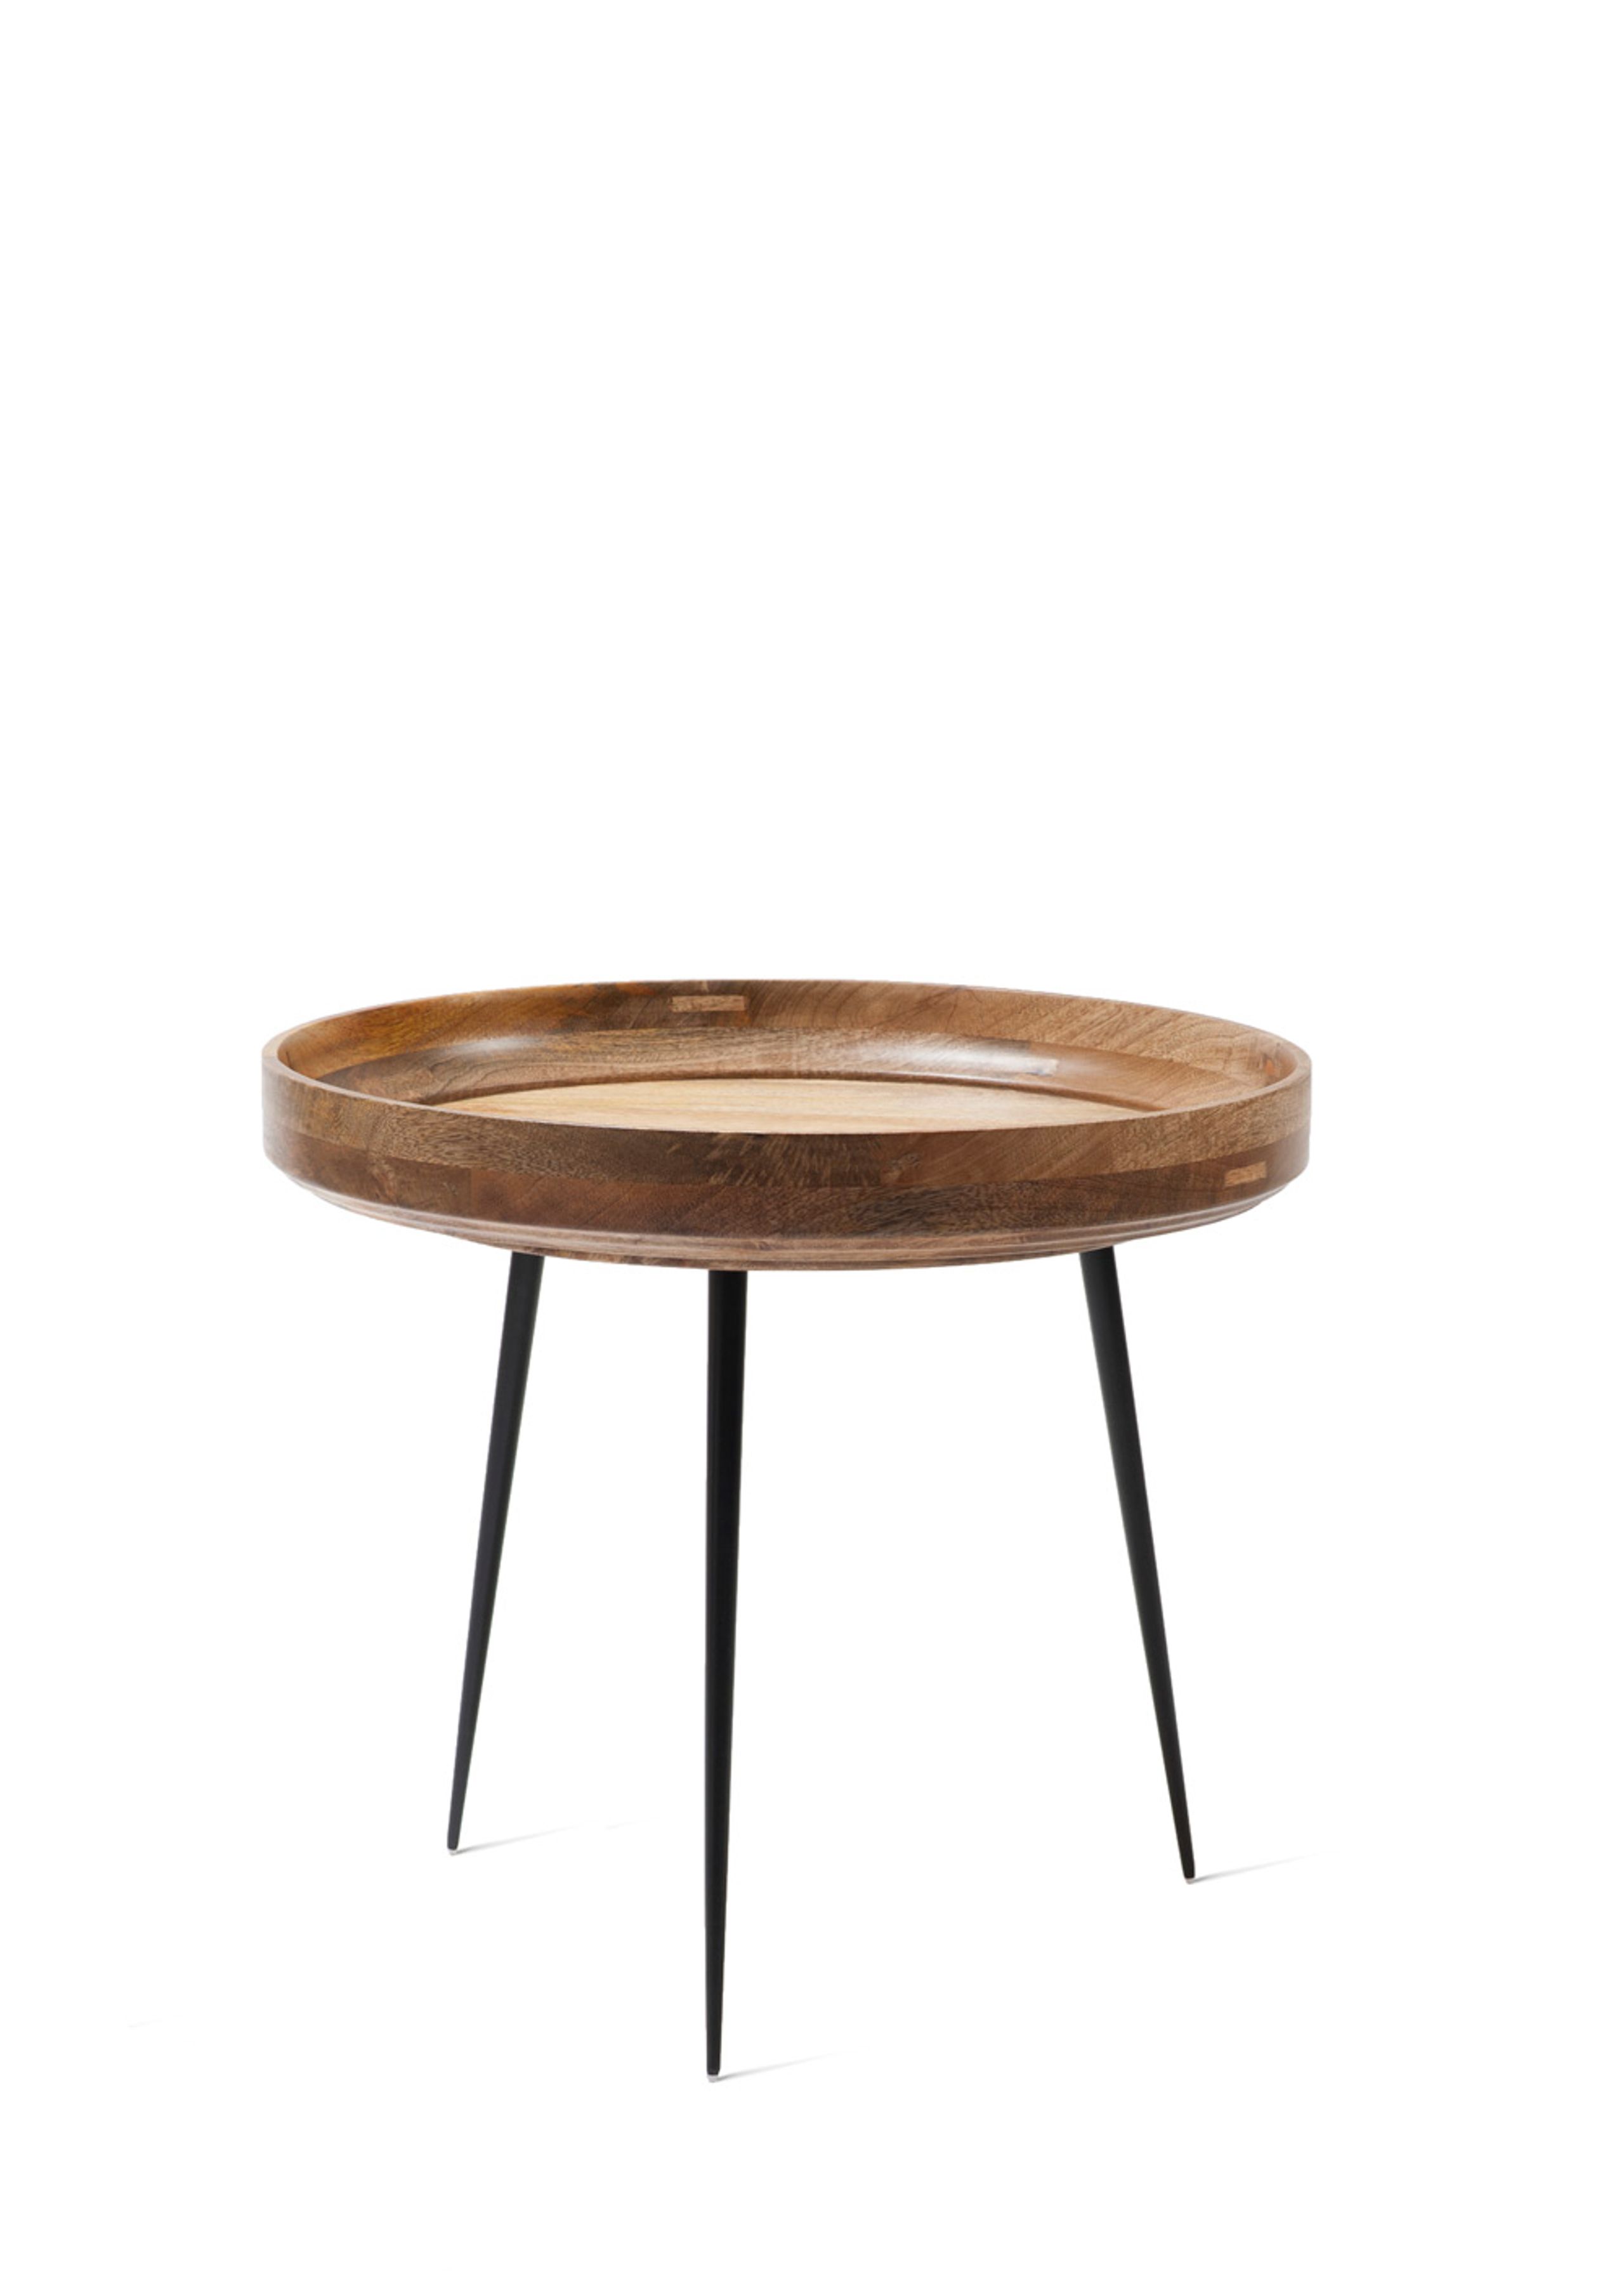 Mater - Conselho - Bowl Table - Natural Lacquered Mango Wood - Large